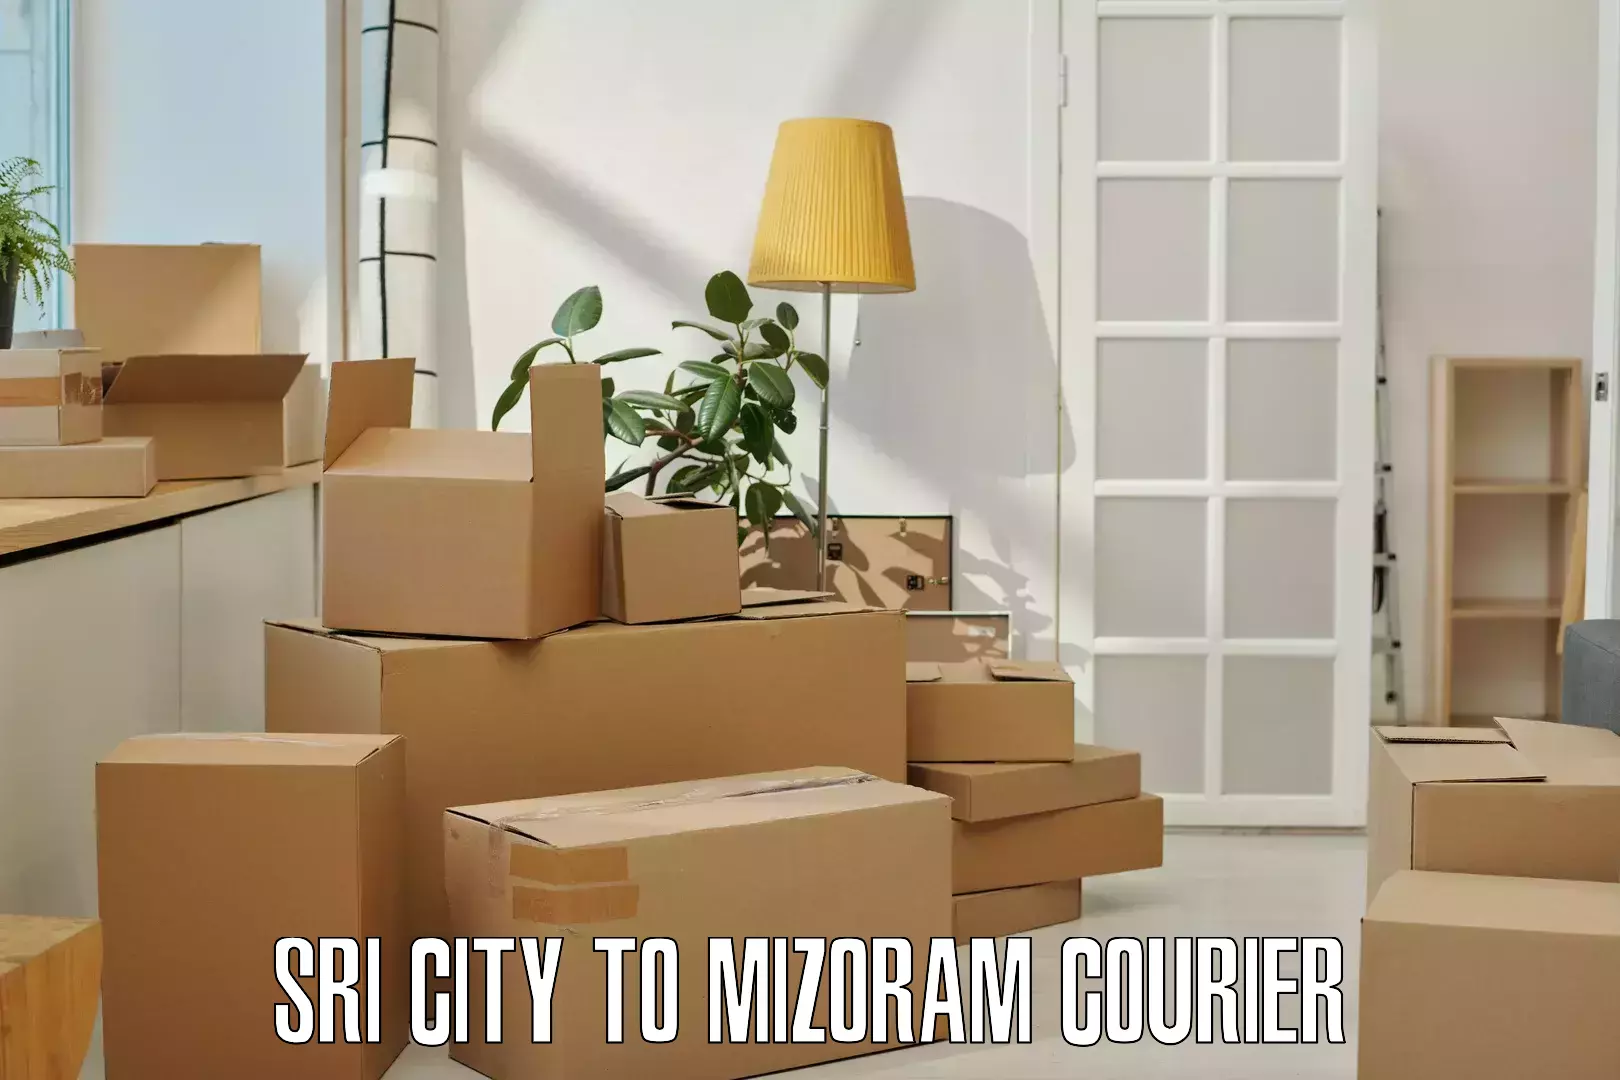 Courier service innovation in Sri City to Mizoram